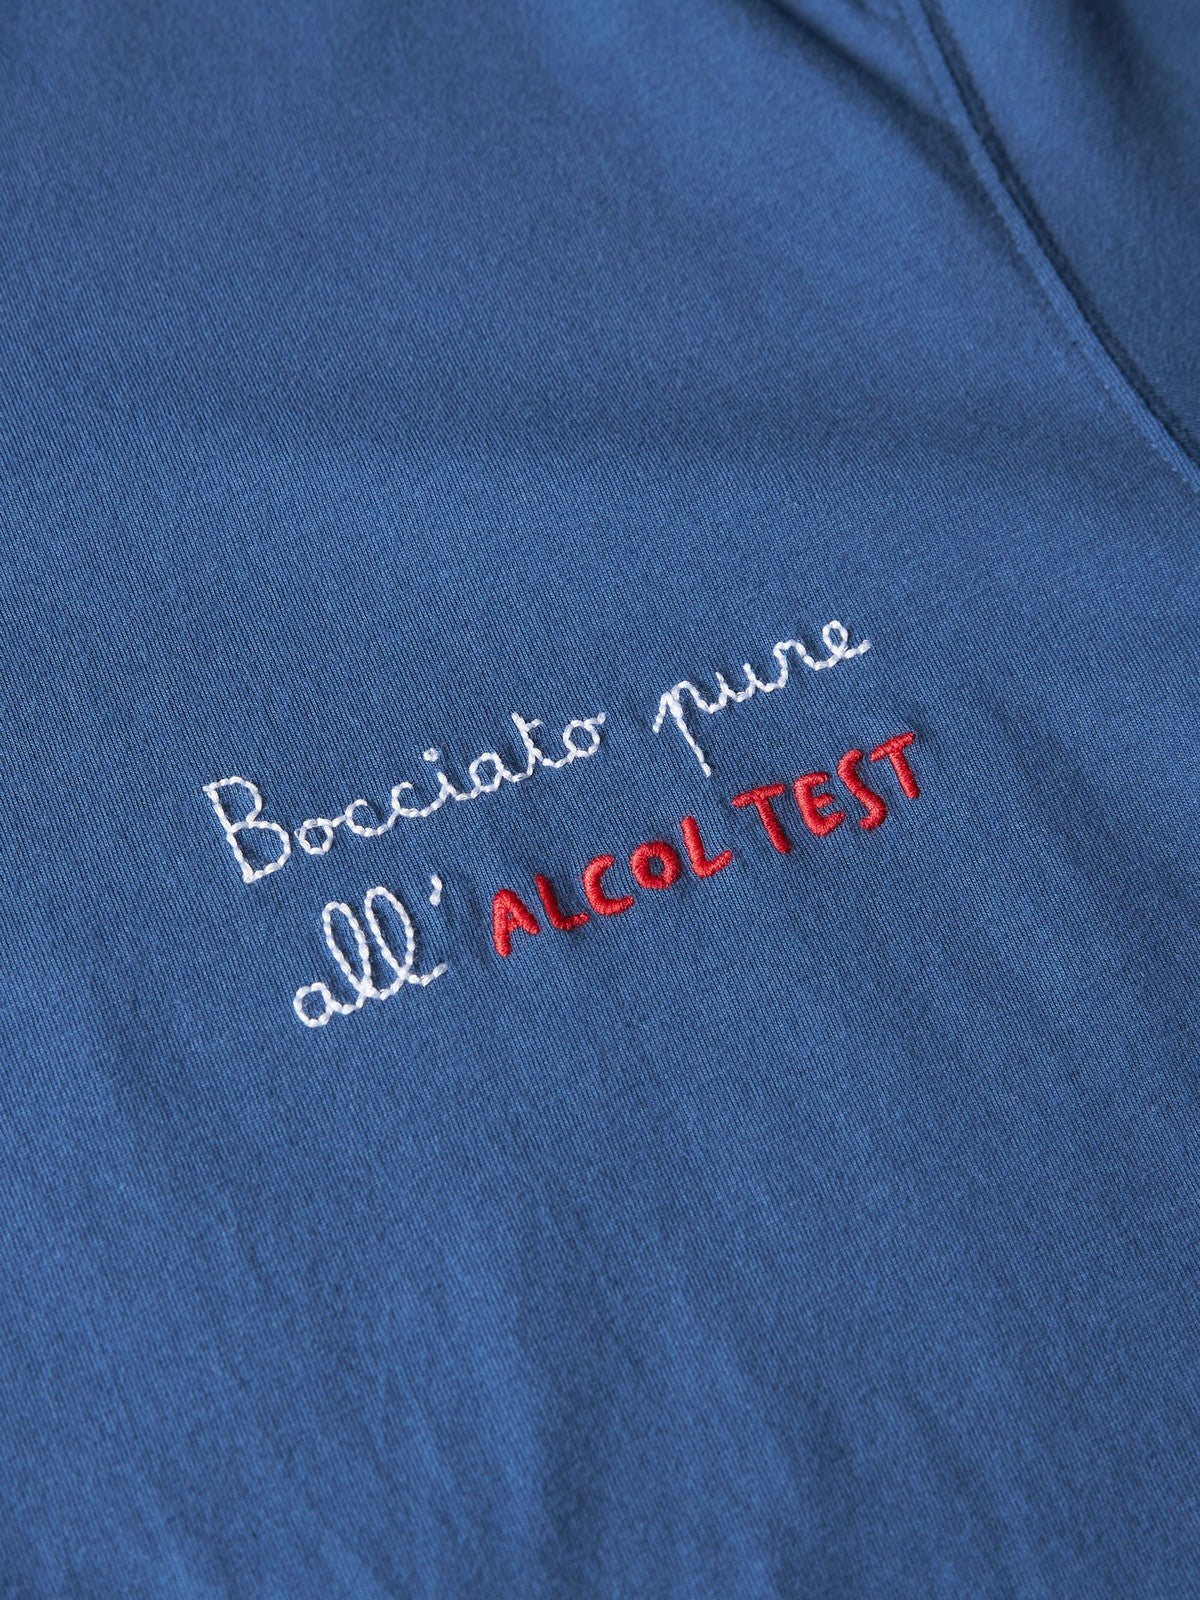 MC2 SAINT BARTH T-Shirt e Polo Uomo  PORTOFINO 04106F Blu